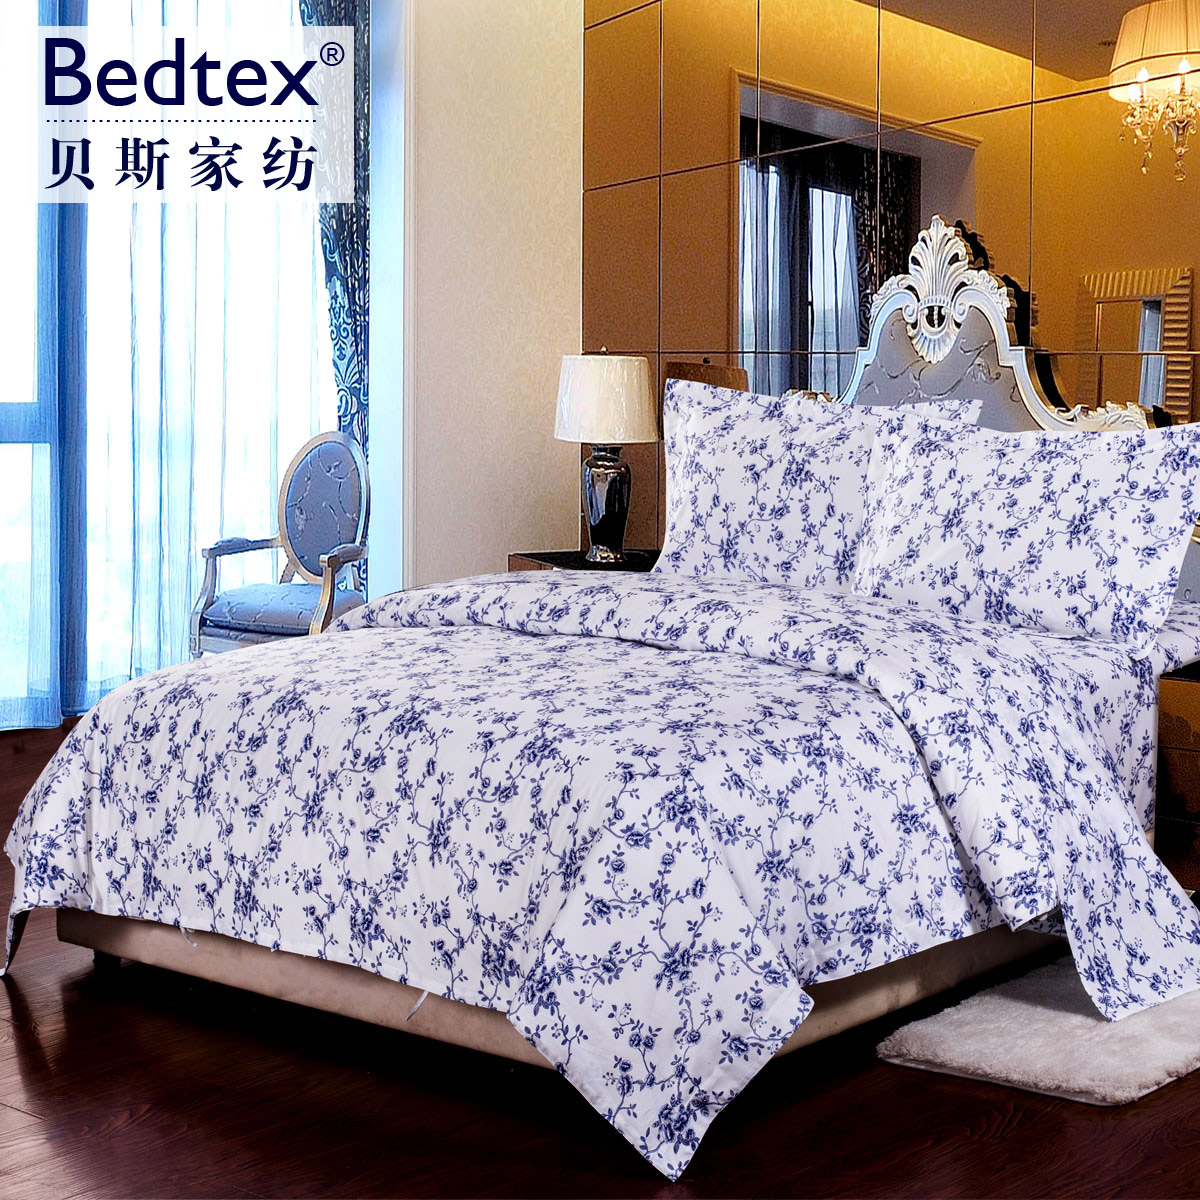 Bedtex 五星级酒店床上用品四件套 全棉贡缎床单被套 青花瓷折扣优惠信息